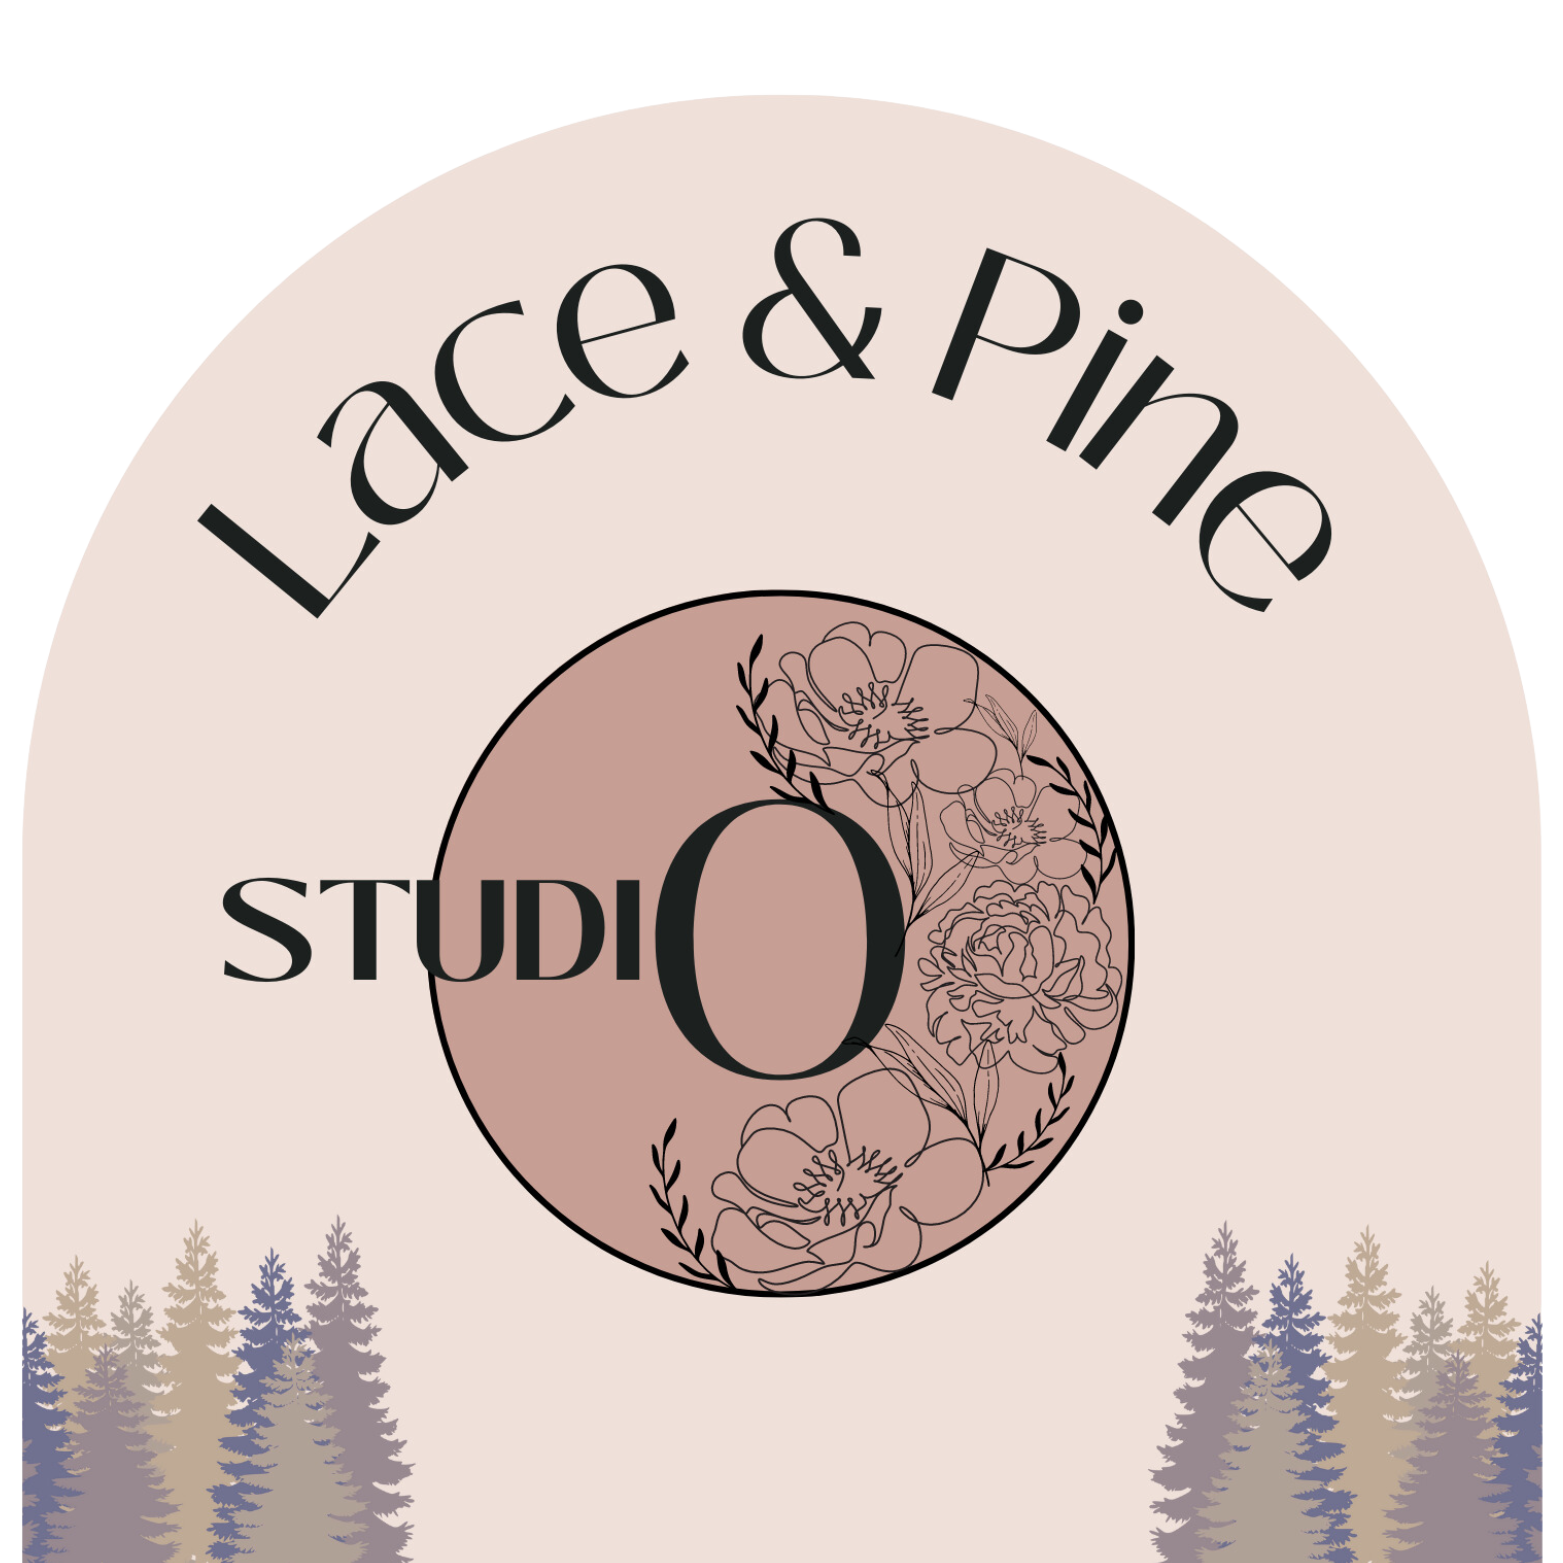 Lace & Pine